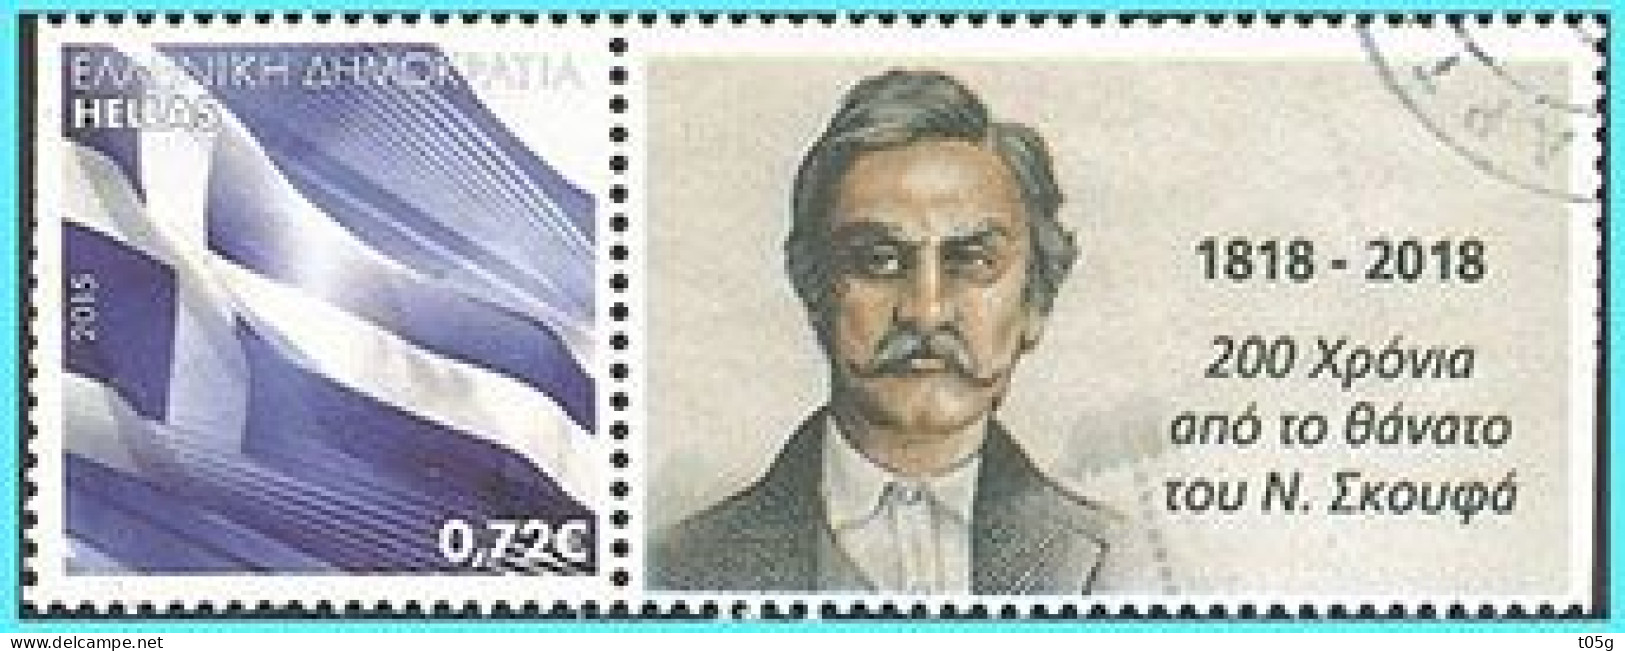 GREECE- GRECE- HELLAS- EPIRUS  2020: Personalised Stamps For τον  Ν. ΣΚΟΥΦΑ  ιδρυτή της ΦΙΛΙΚΗΣ ΕΤΑΙΡΕΙΑΣ  Used - Gebraucht